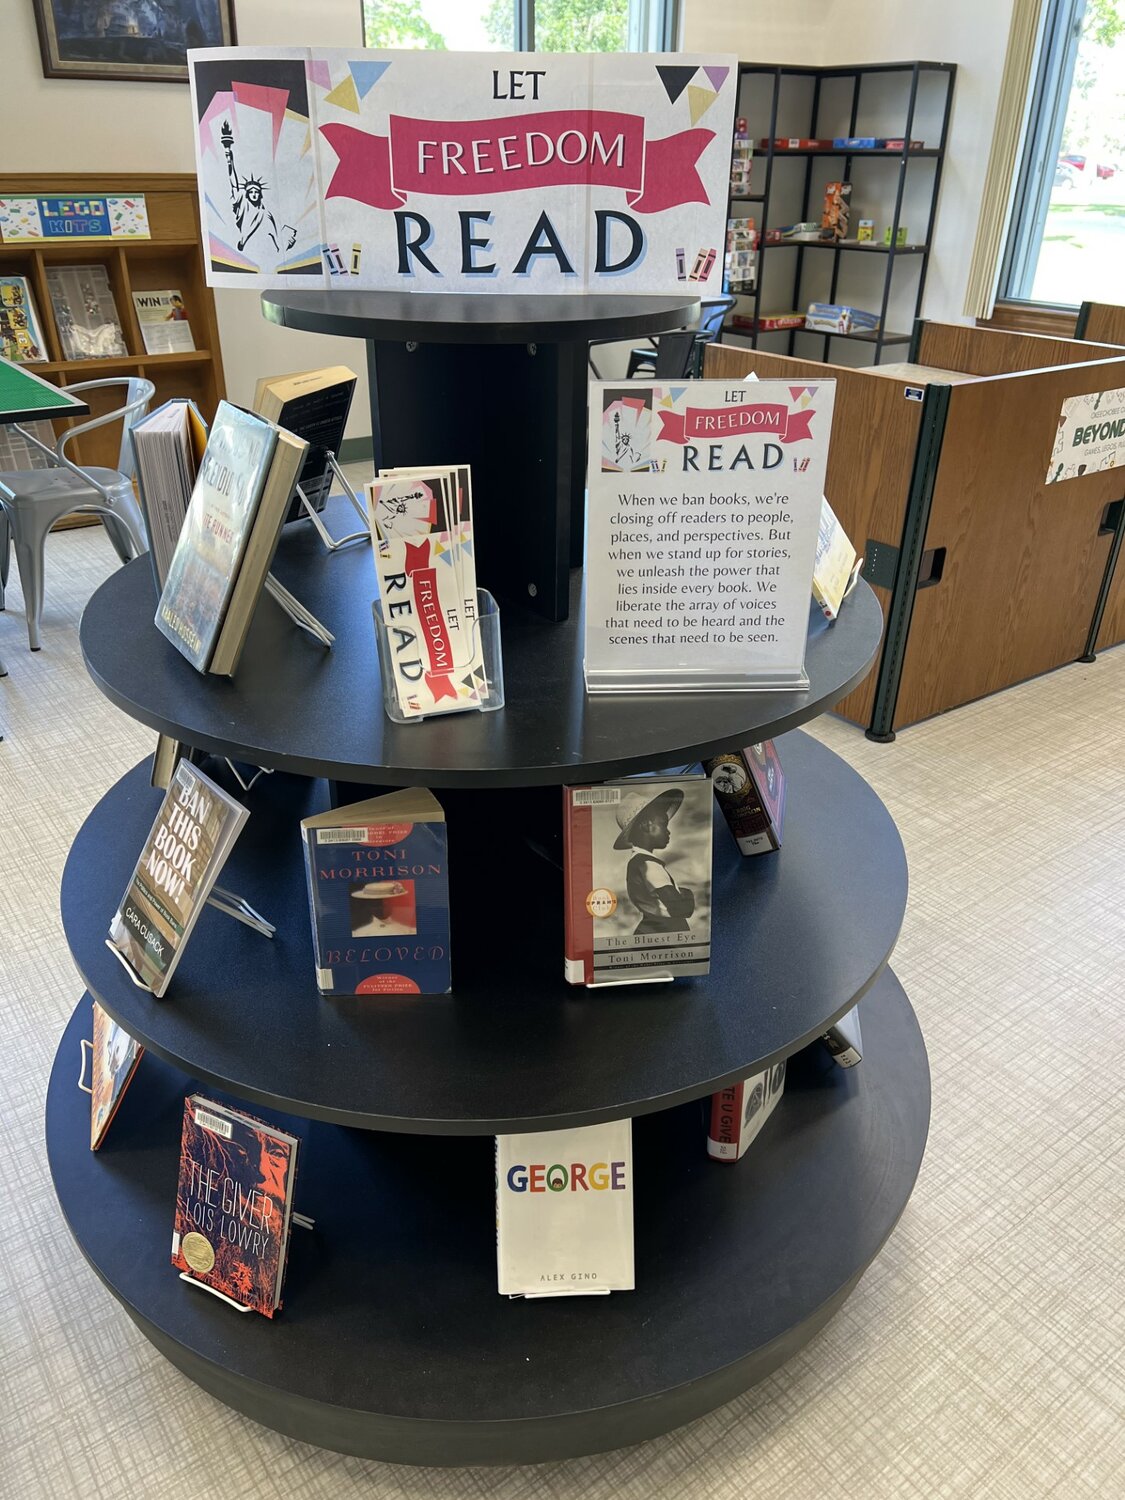 OKEECHOBEE -- In October, the Okeechobee County Library celebrated "Freedom to Read"